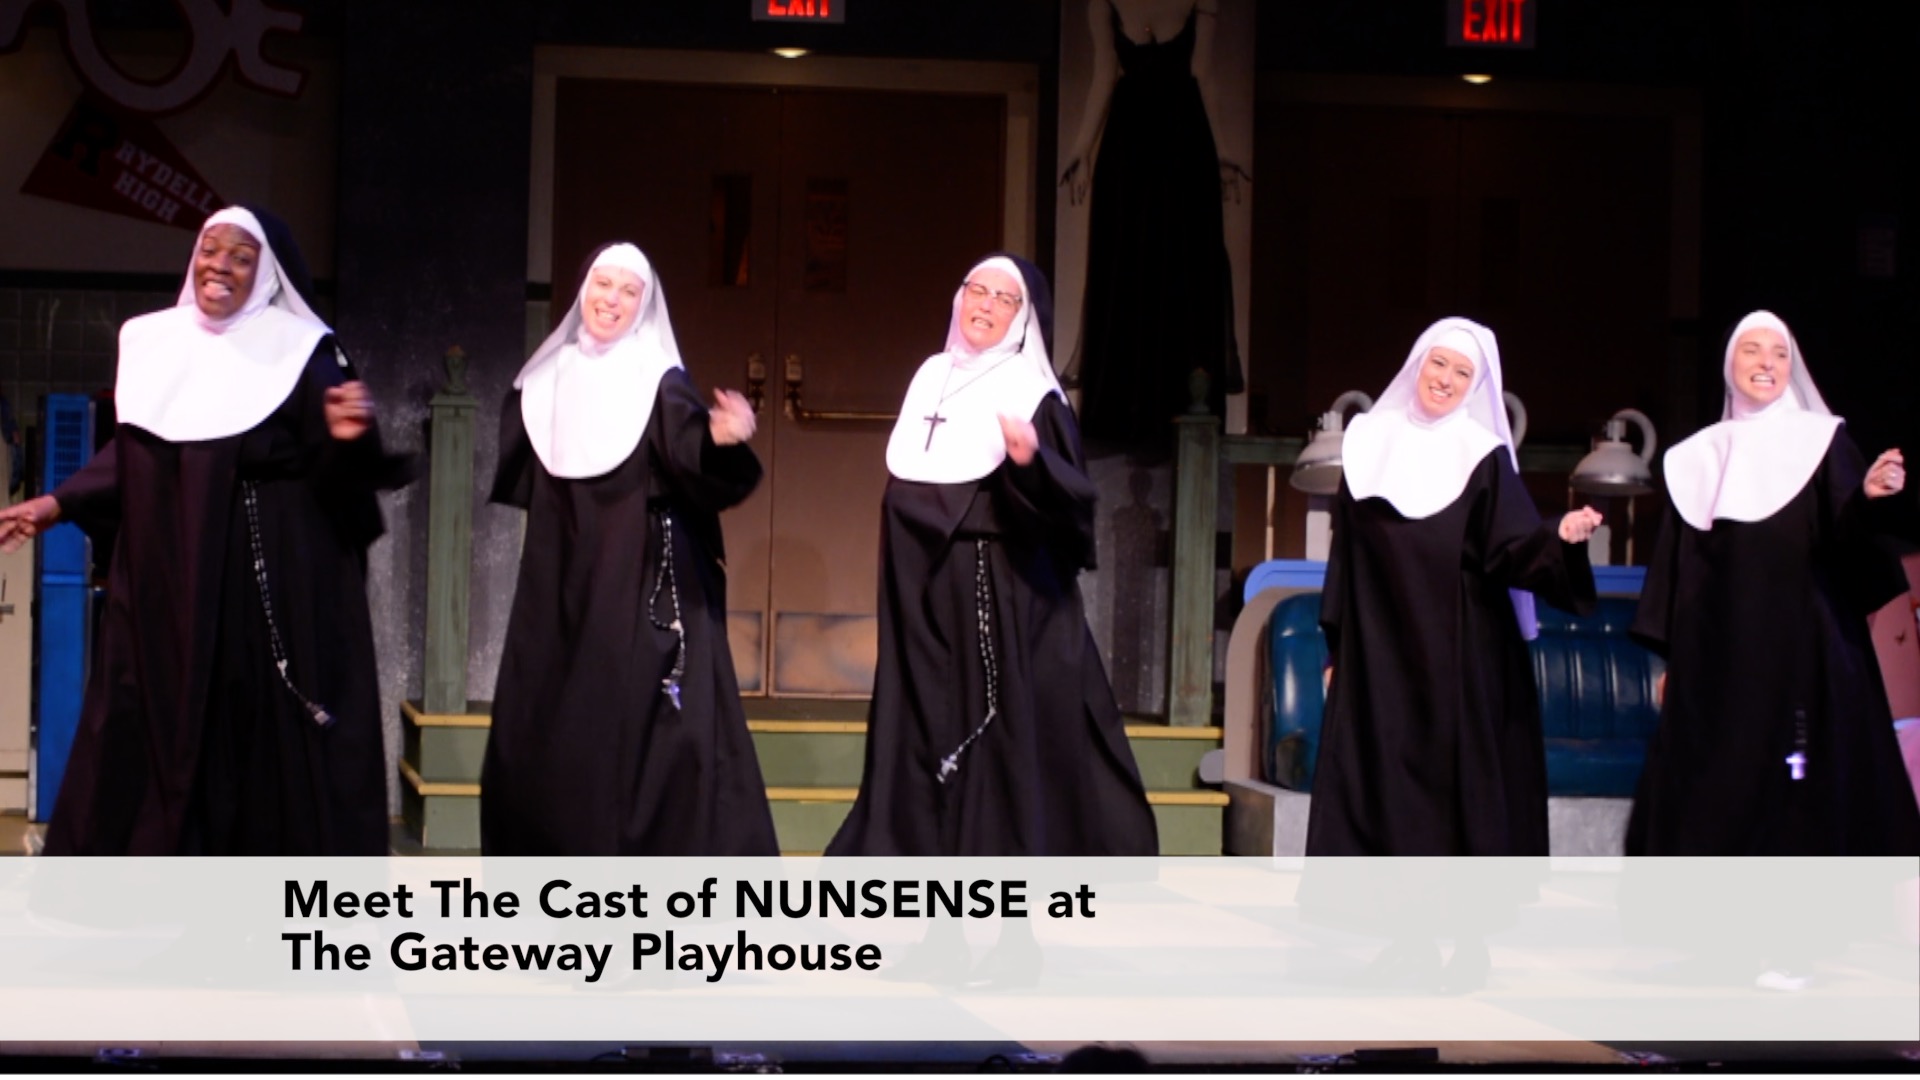 Meet The Cast of Nunsense at The Gateway